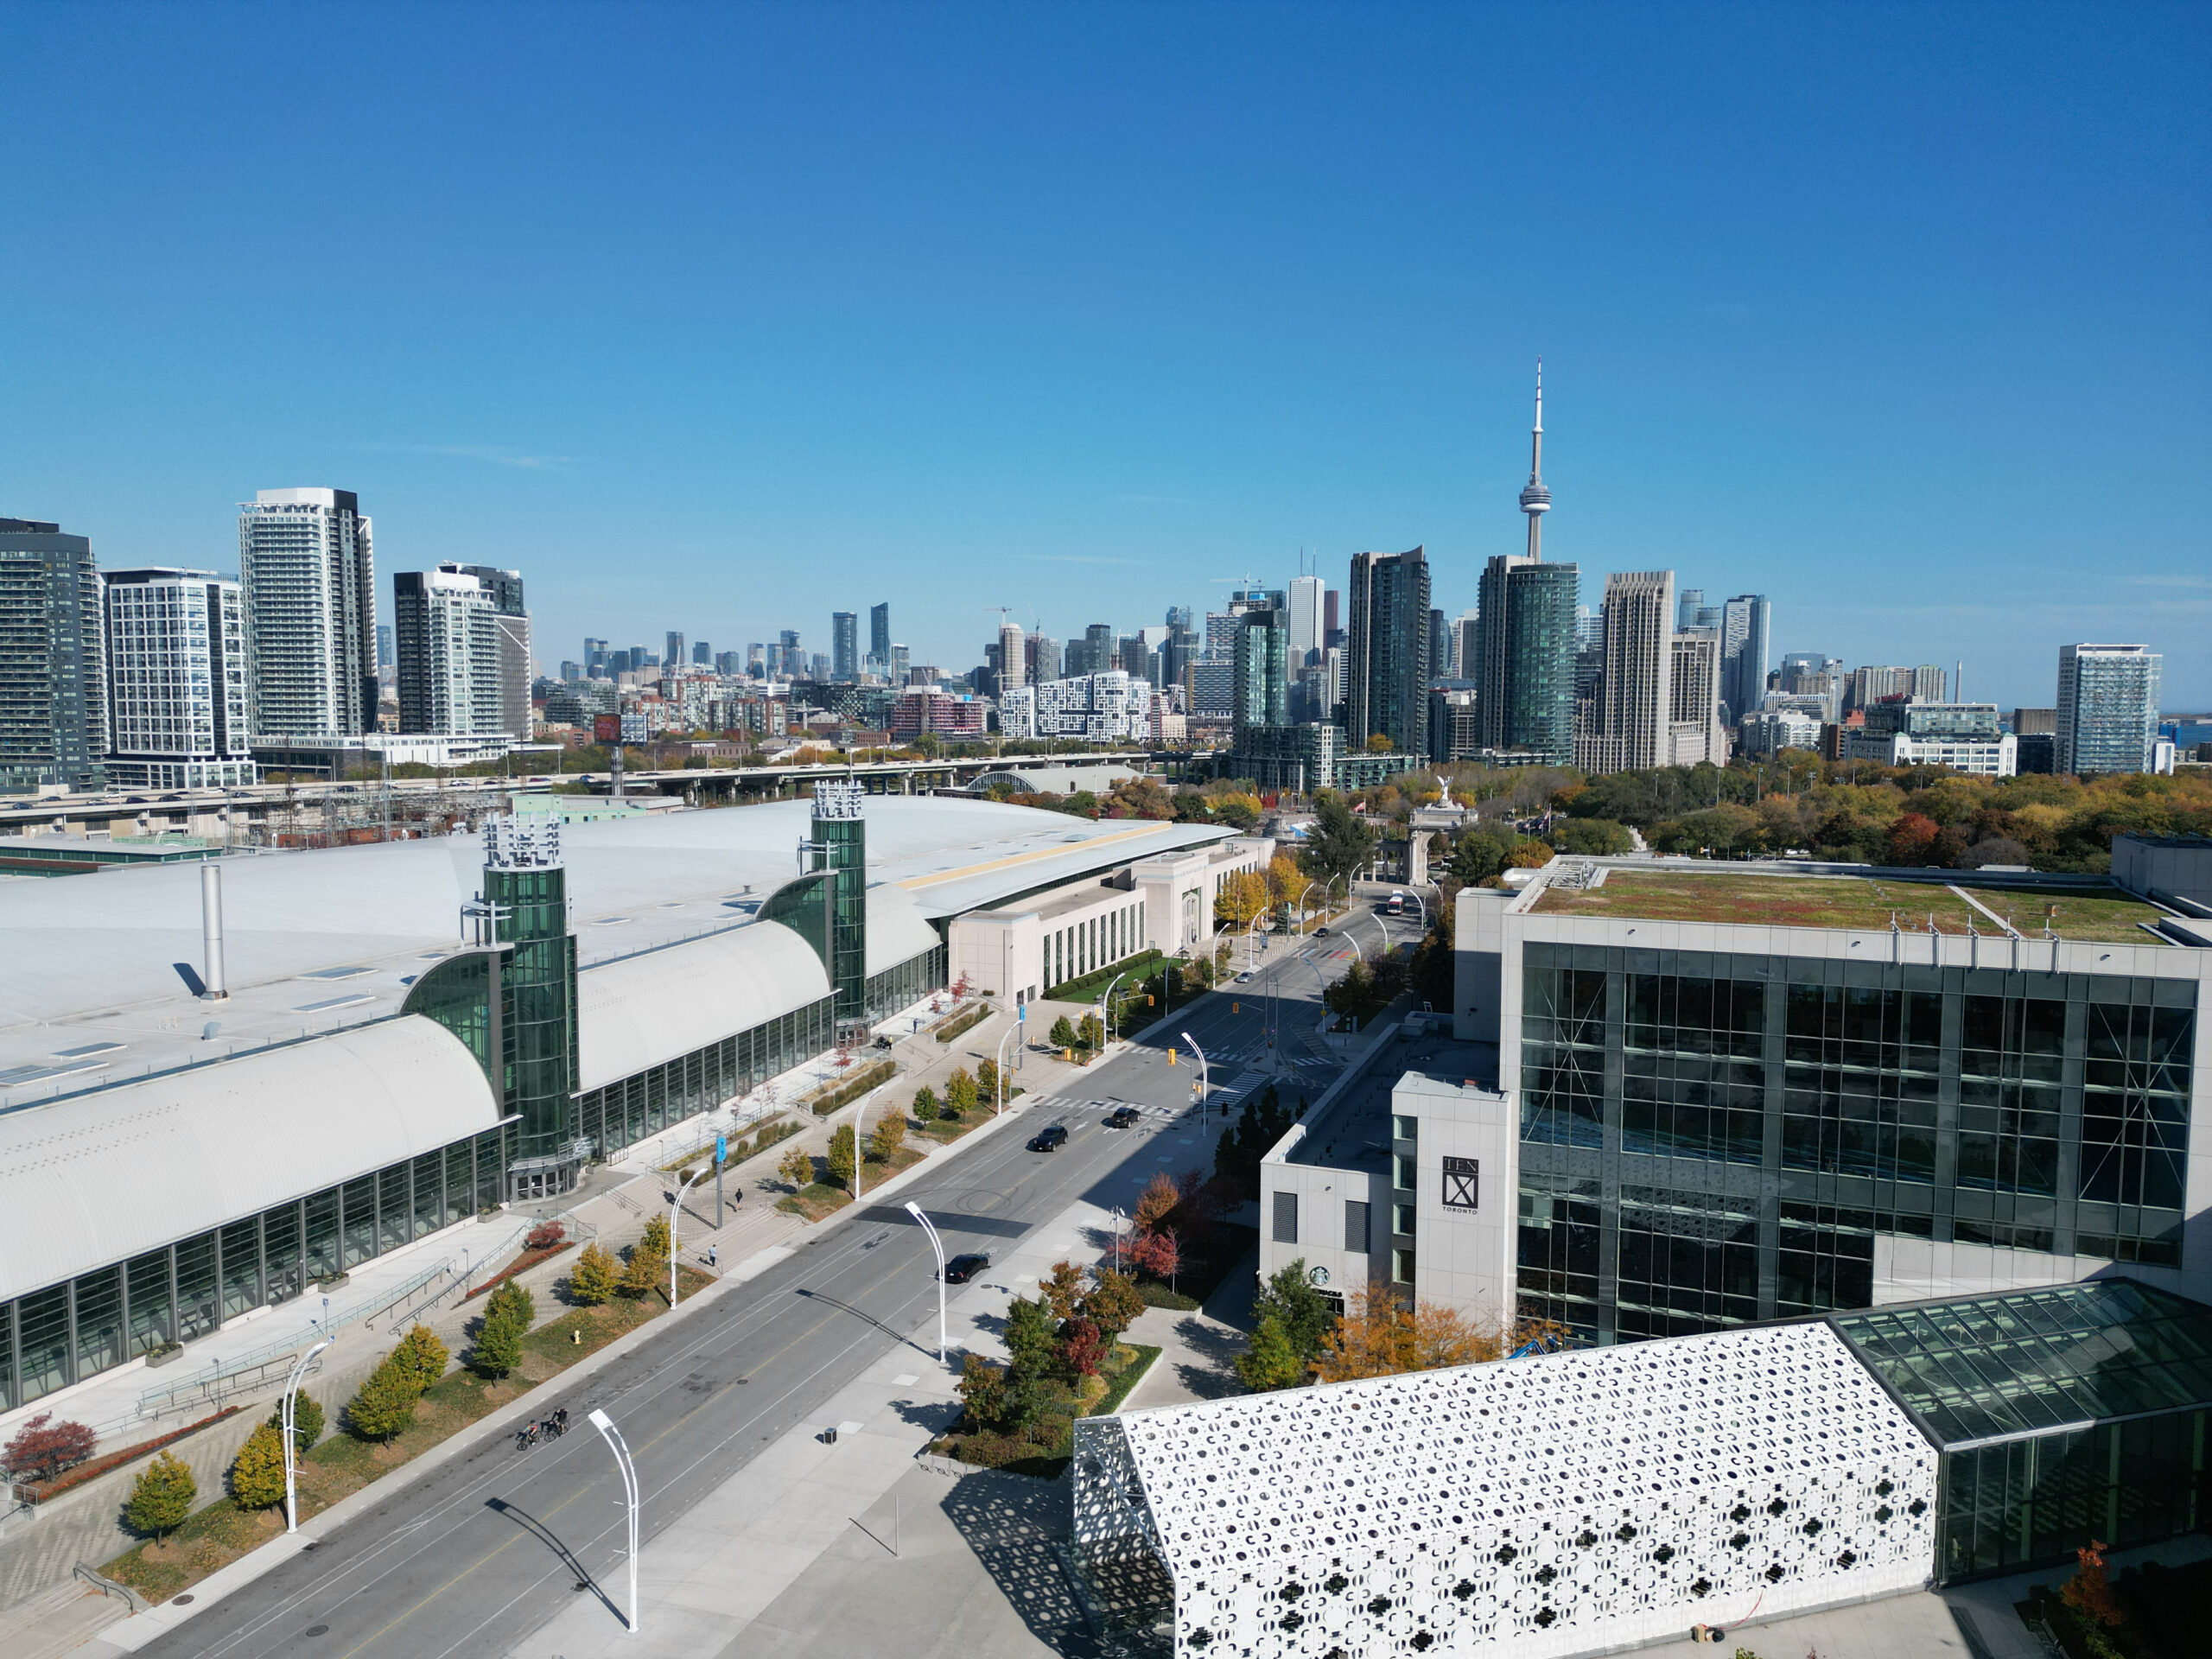 Exhibition Place convention center in Toronto, Ontario, Canada